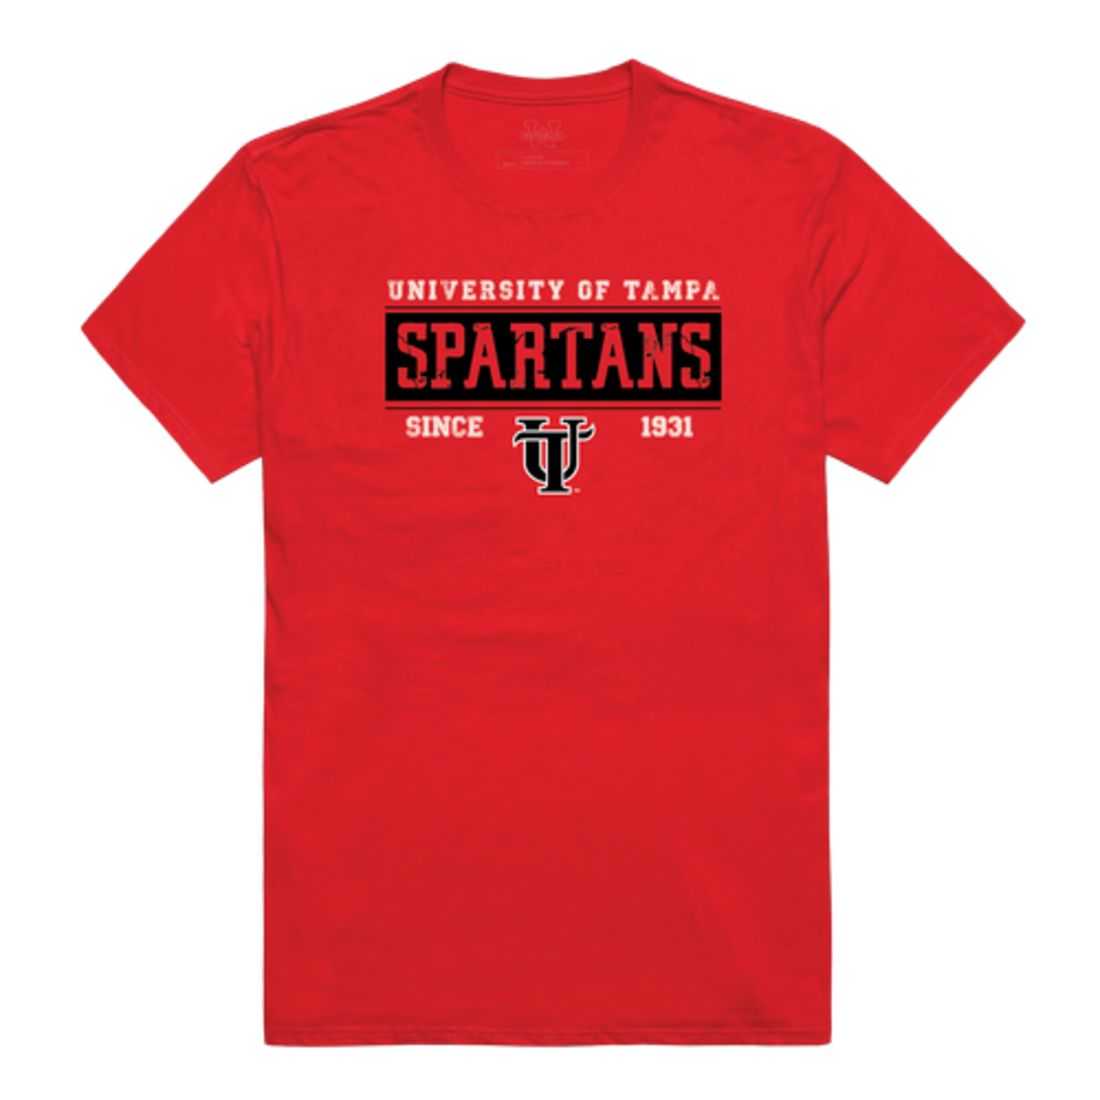 University of Tampa Spartans Established T-Shirt